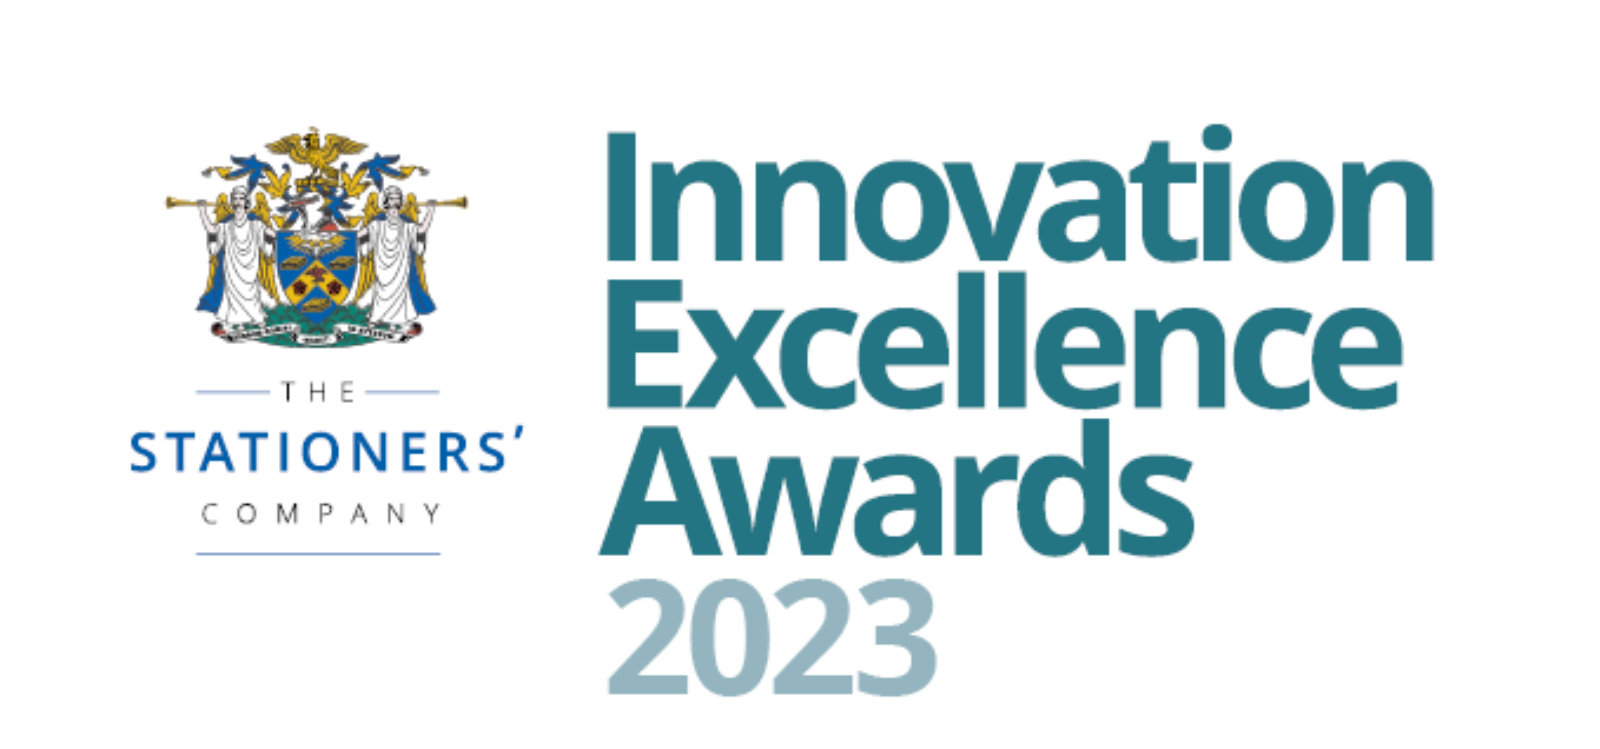 Innovation Excellence Awards Lunch 2023 - 25 September